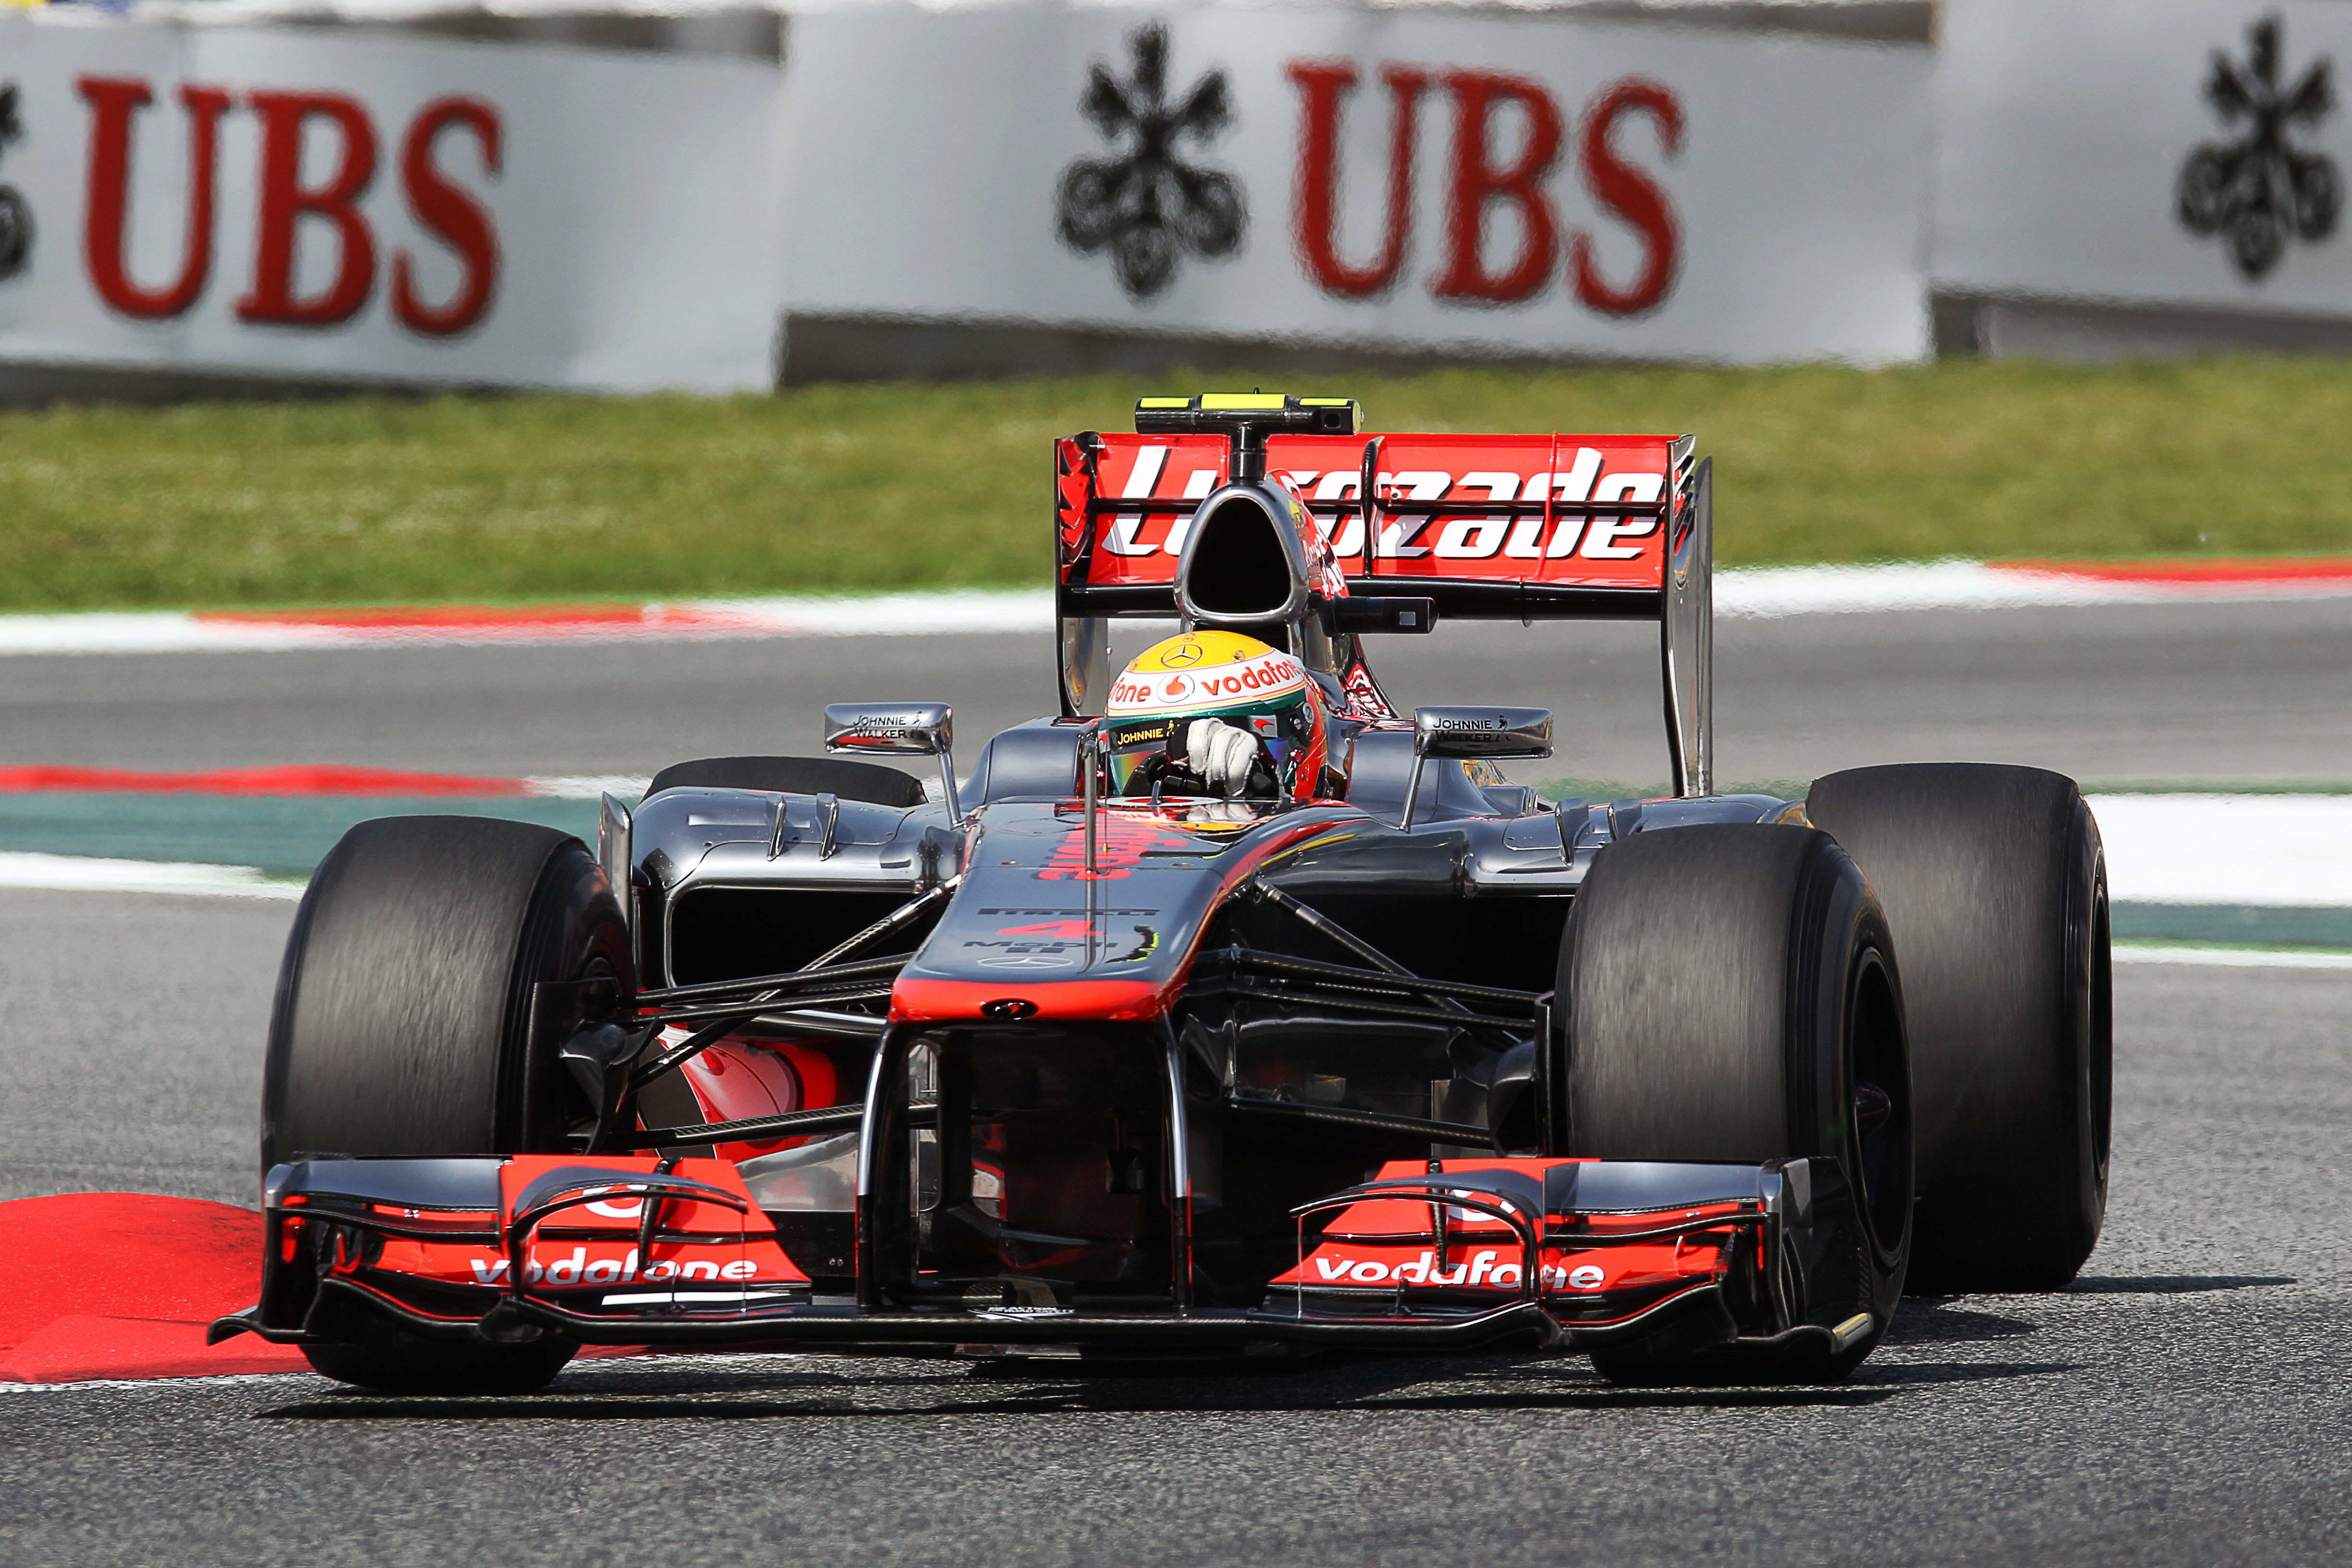 Kwalificatie: Pole voor Hamilton, Maldonado stunt